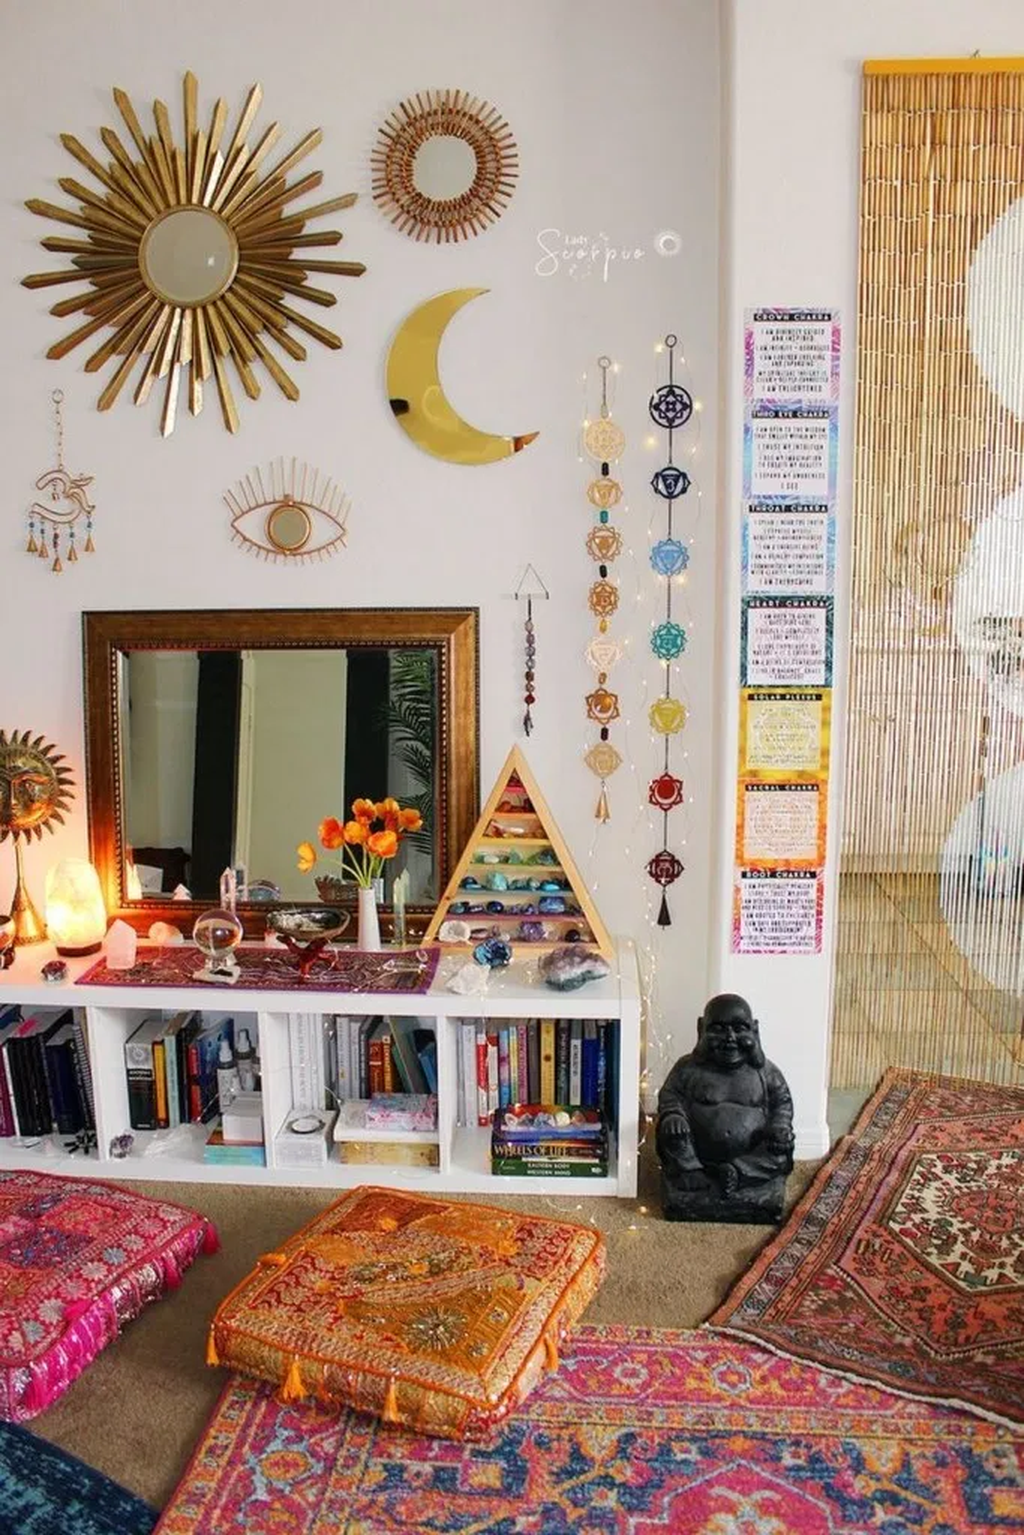 Creatice Hippie Home Decor with Simple Decor